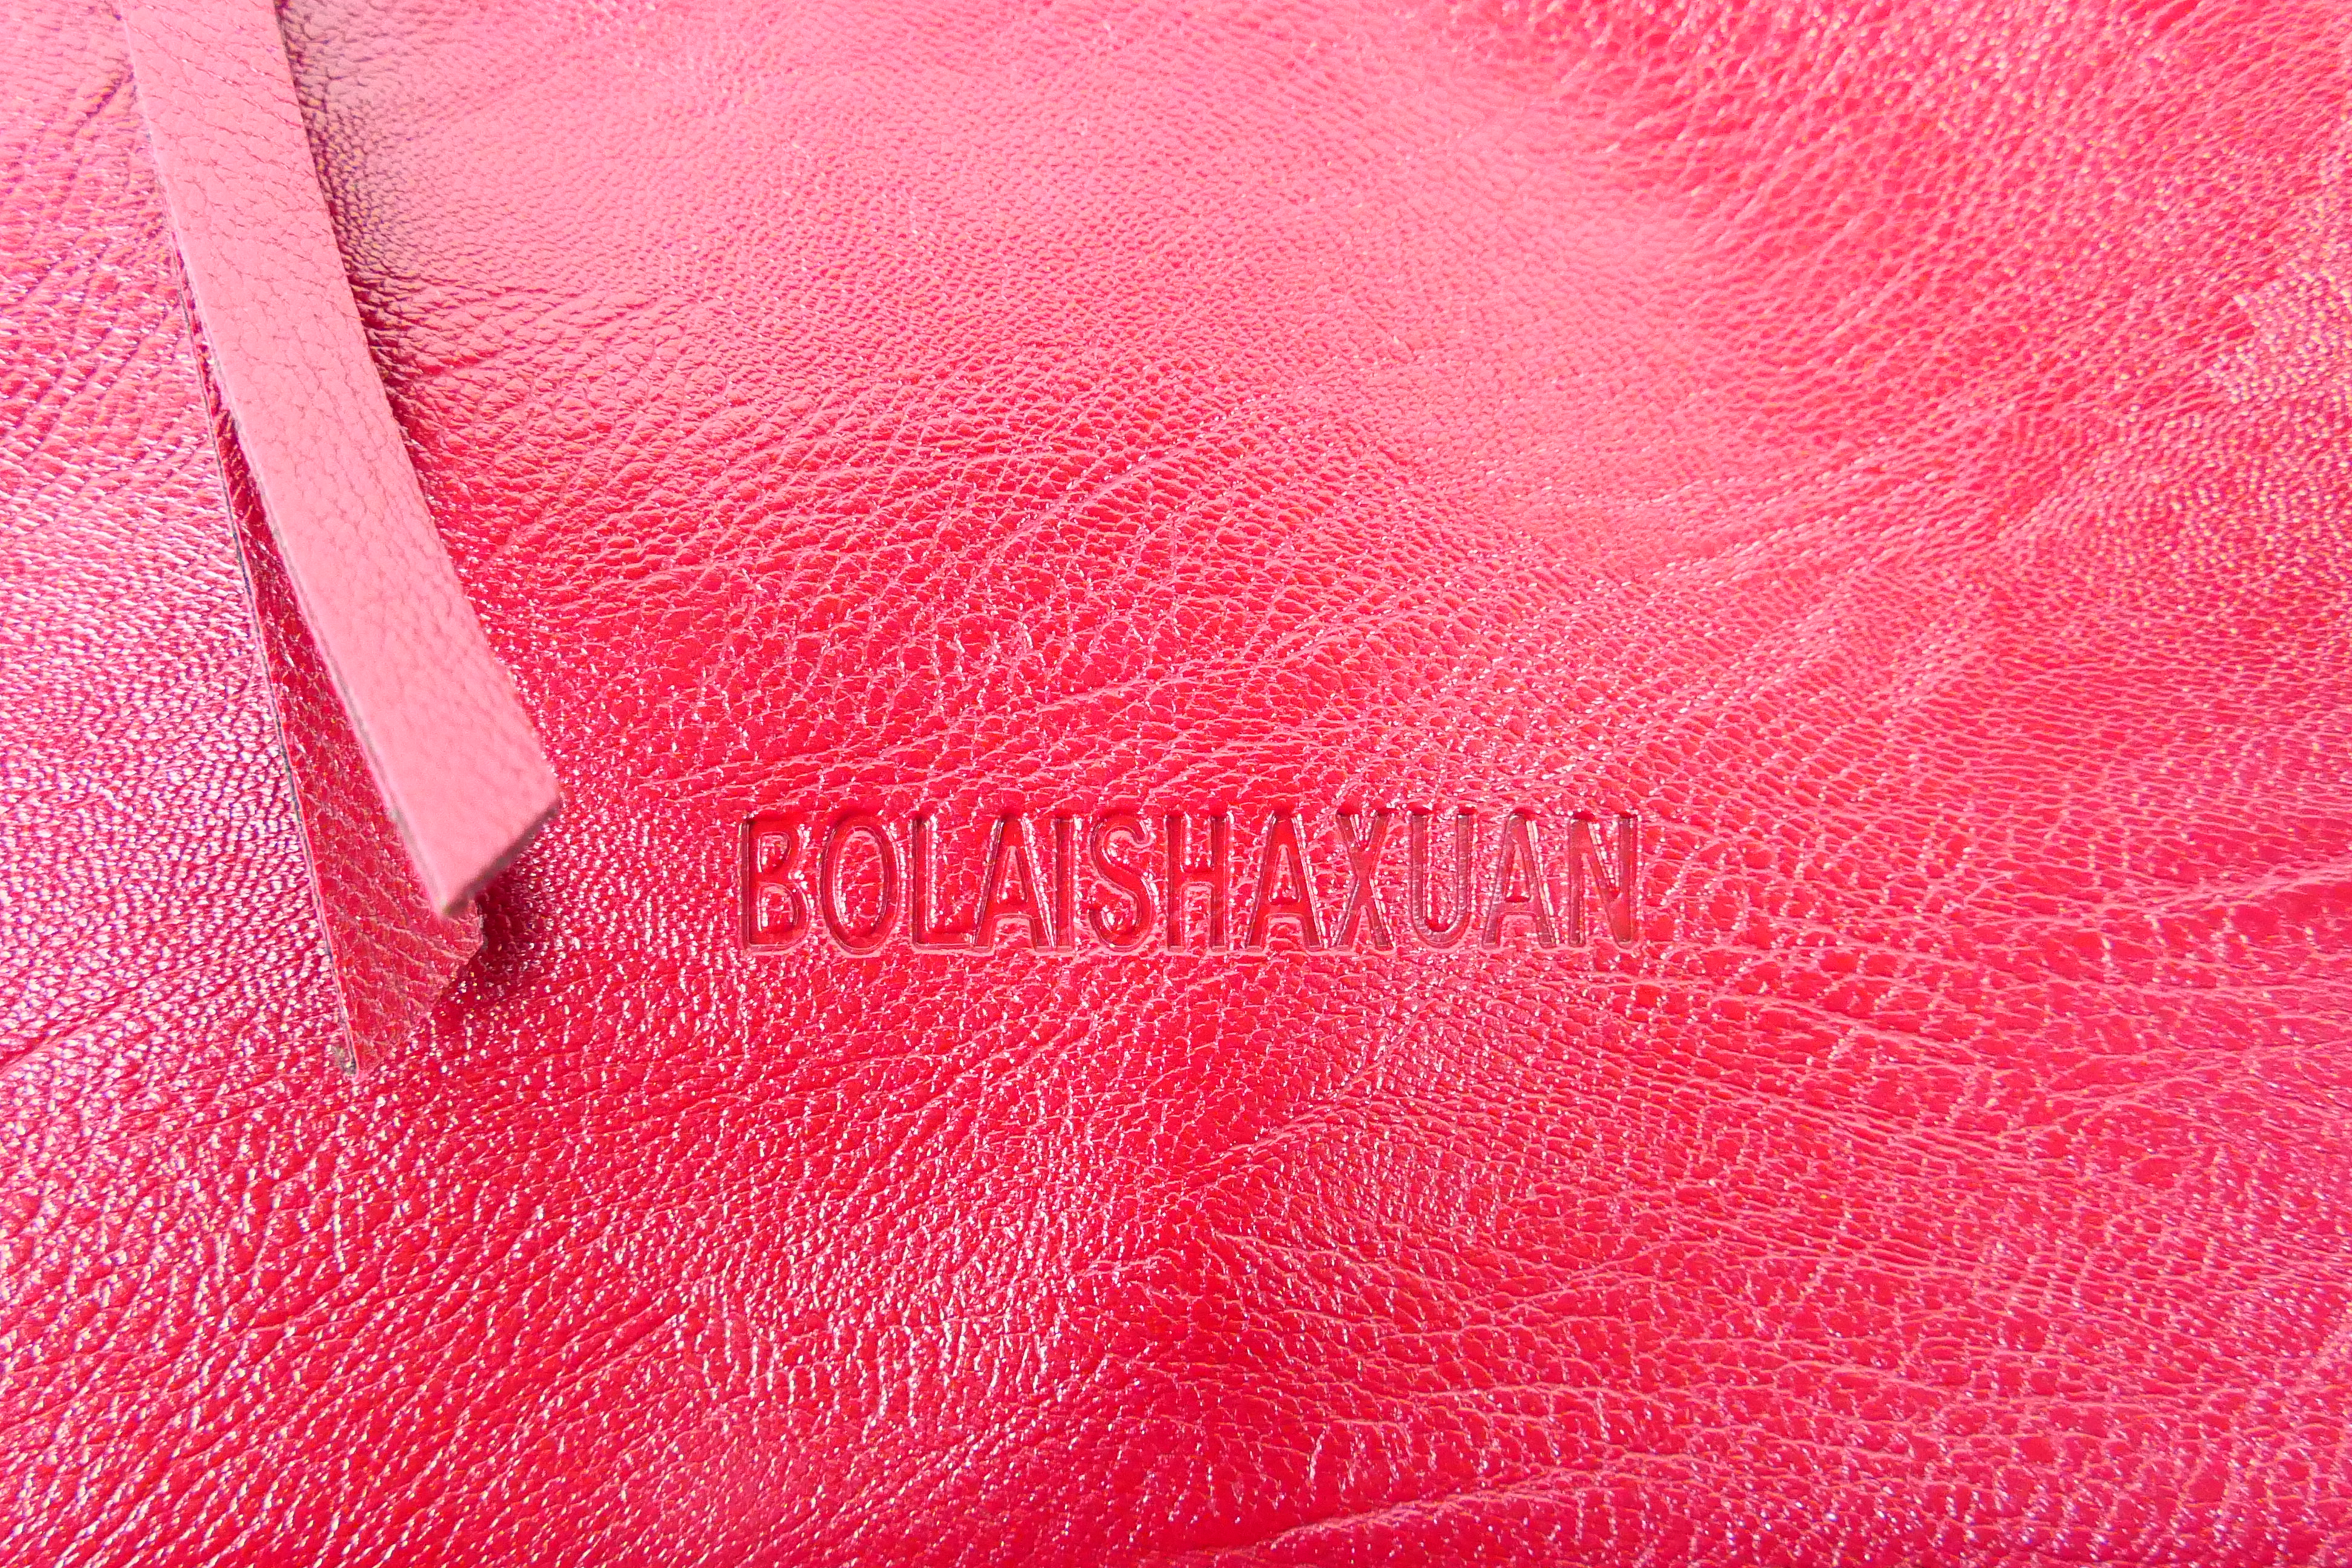 Bolaishauxuan - a deep red Bolaishauxuan - Image 3 of 6